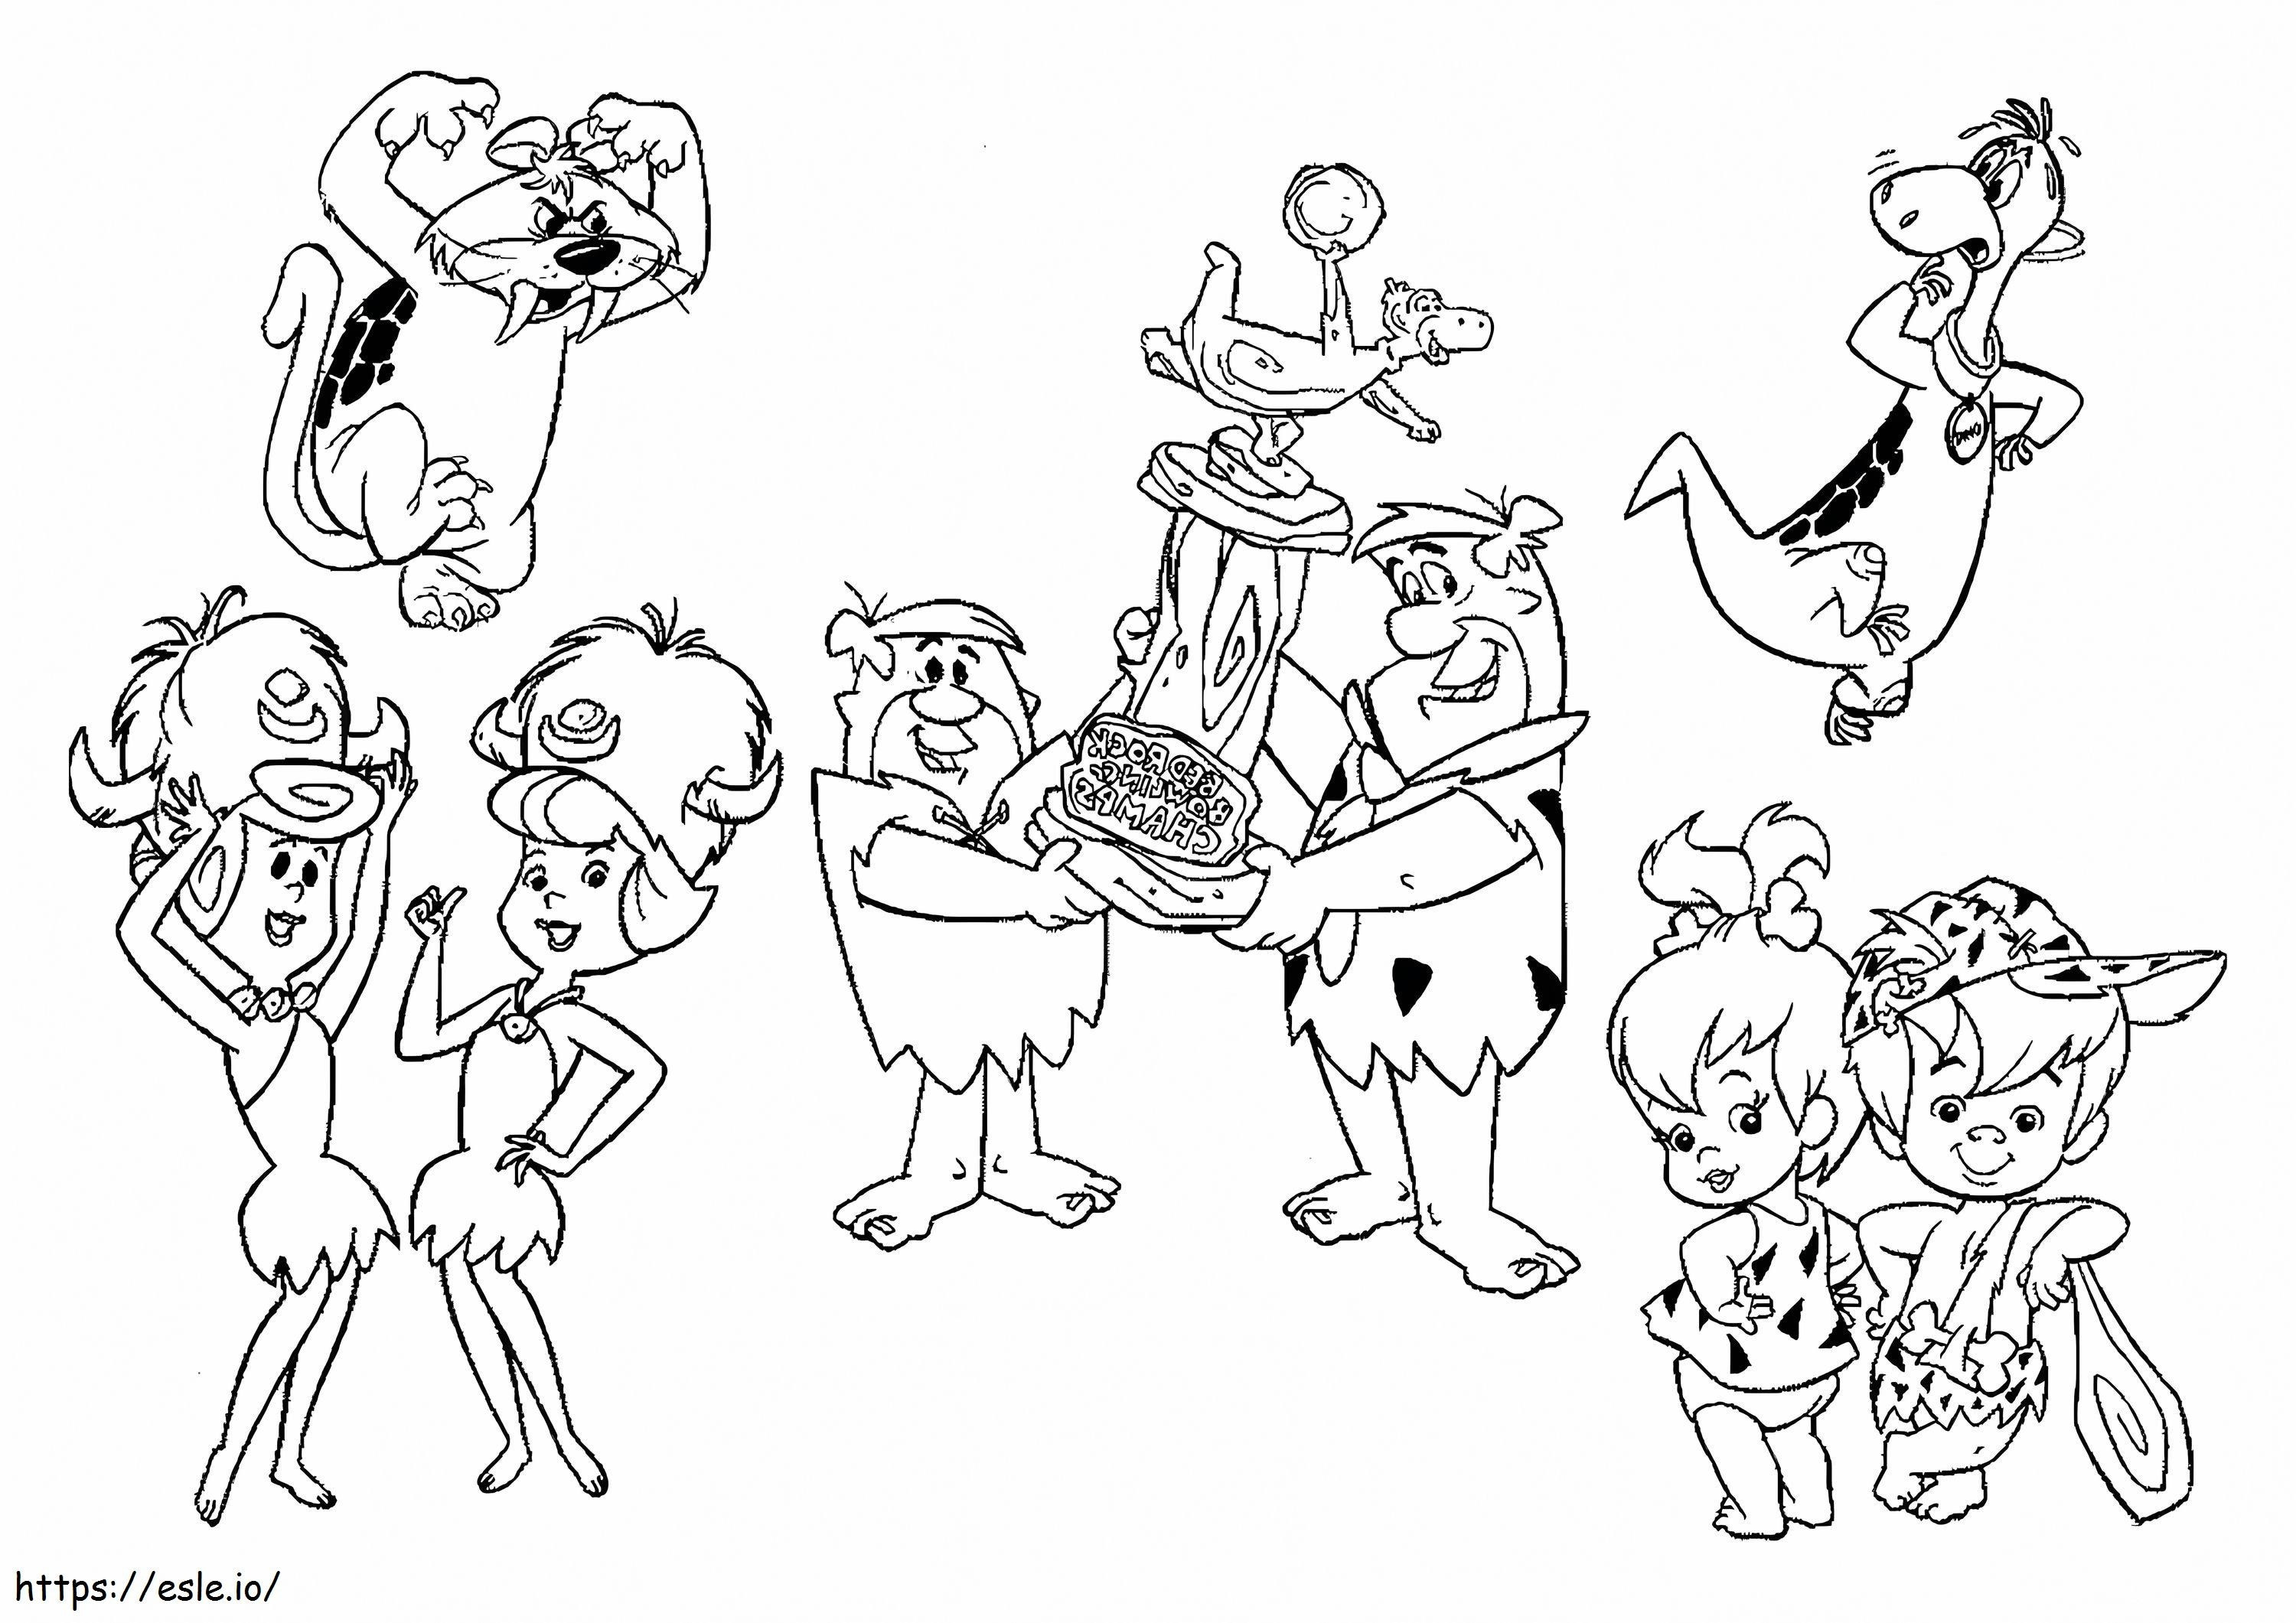 Die Flintstones-Charaktere ausmalbilder